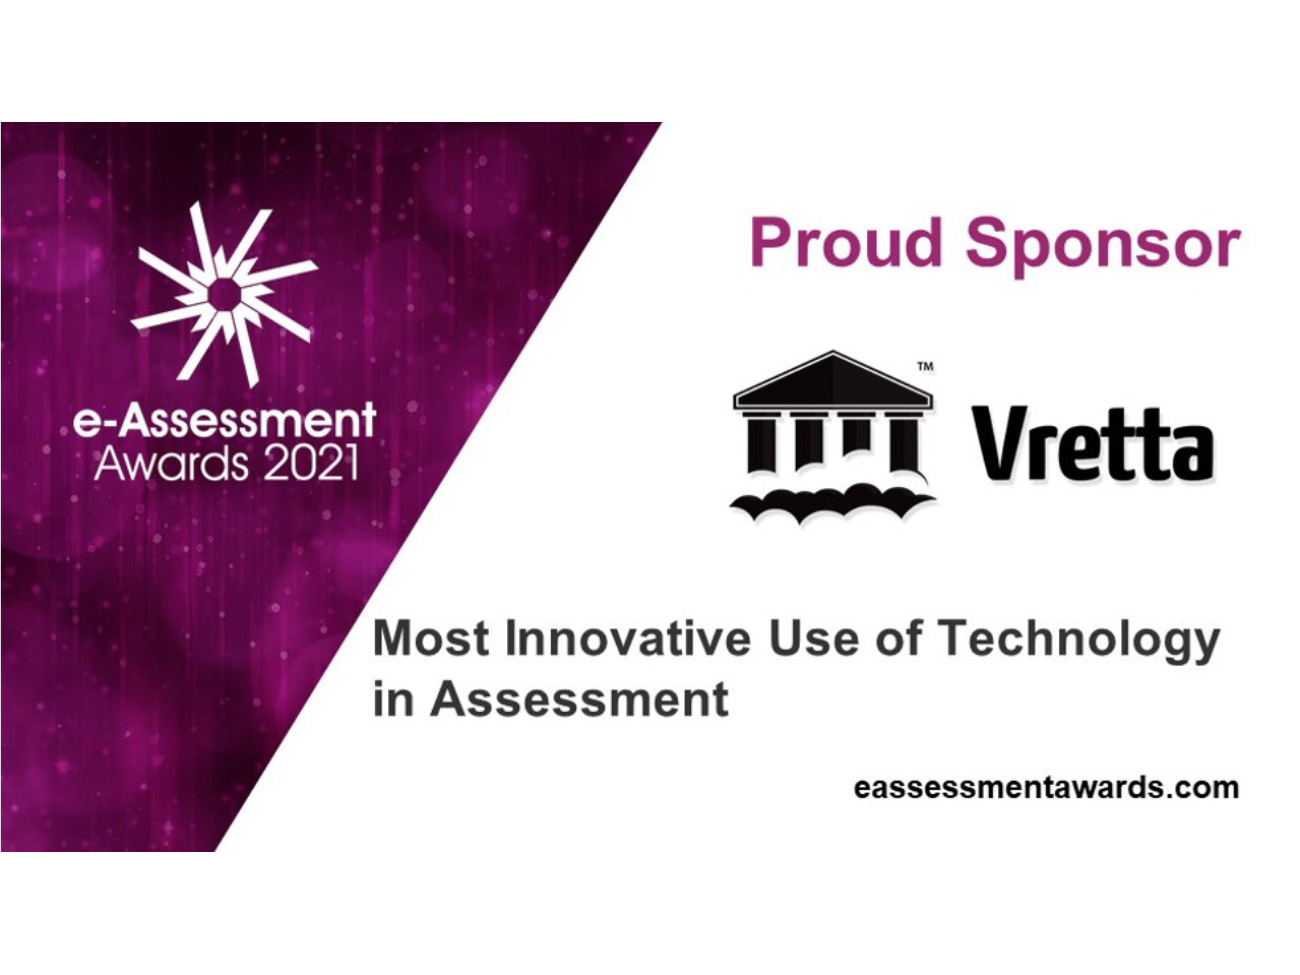 Vretta Sponsors The Most Innovative Use of Technology in Assessment Award at the e-Assessment Award Ceremony